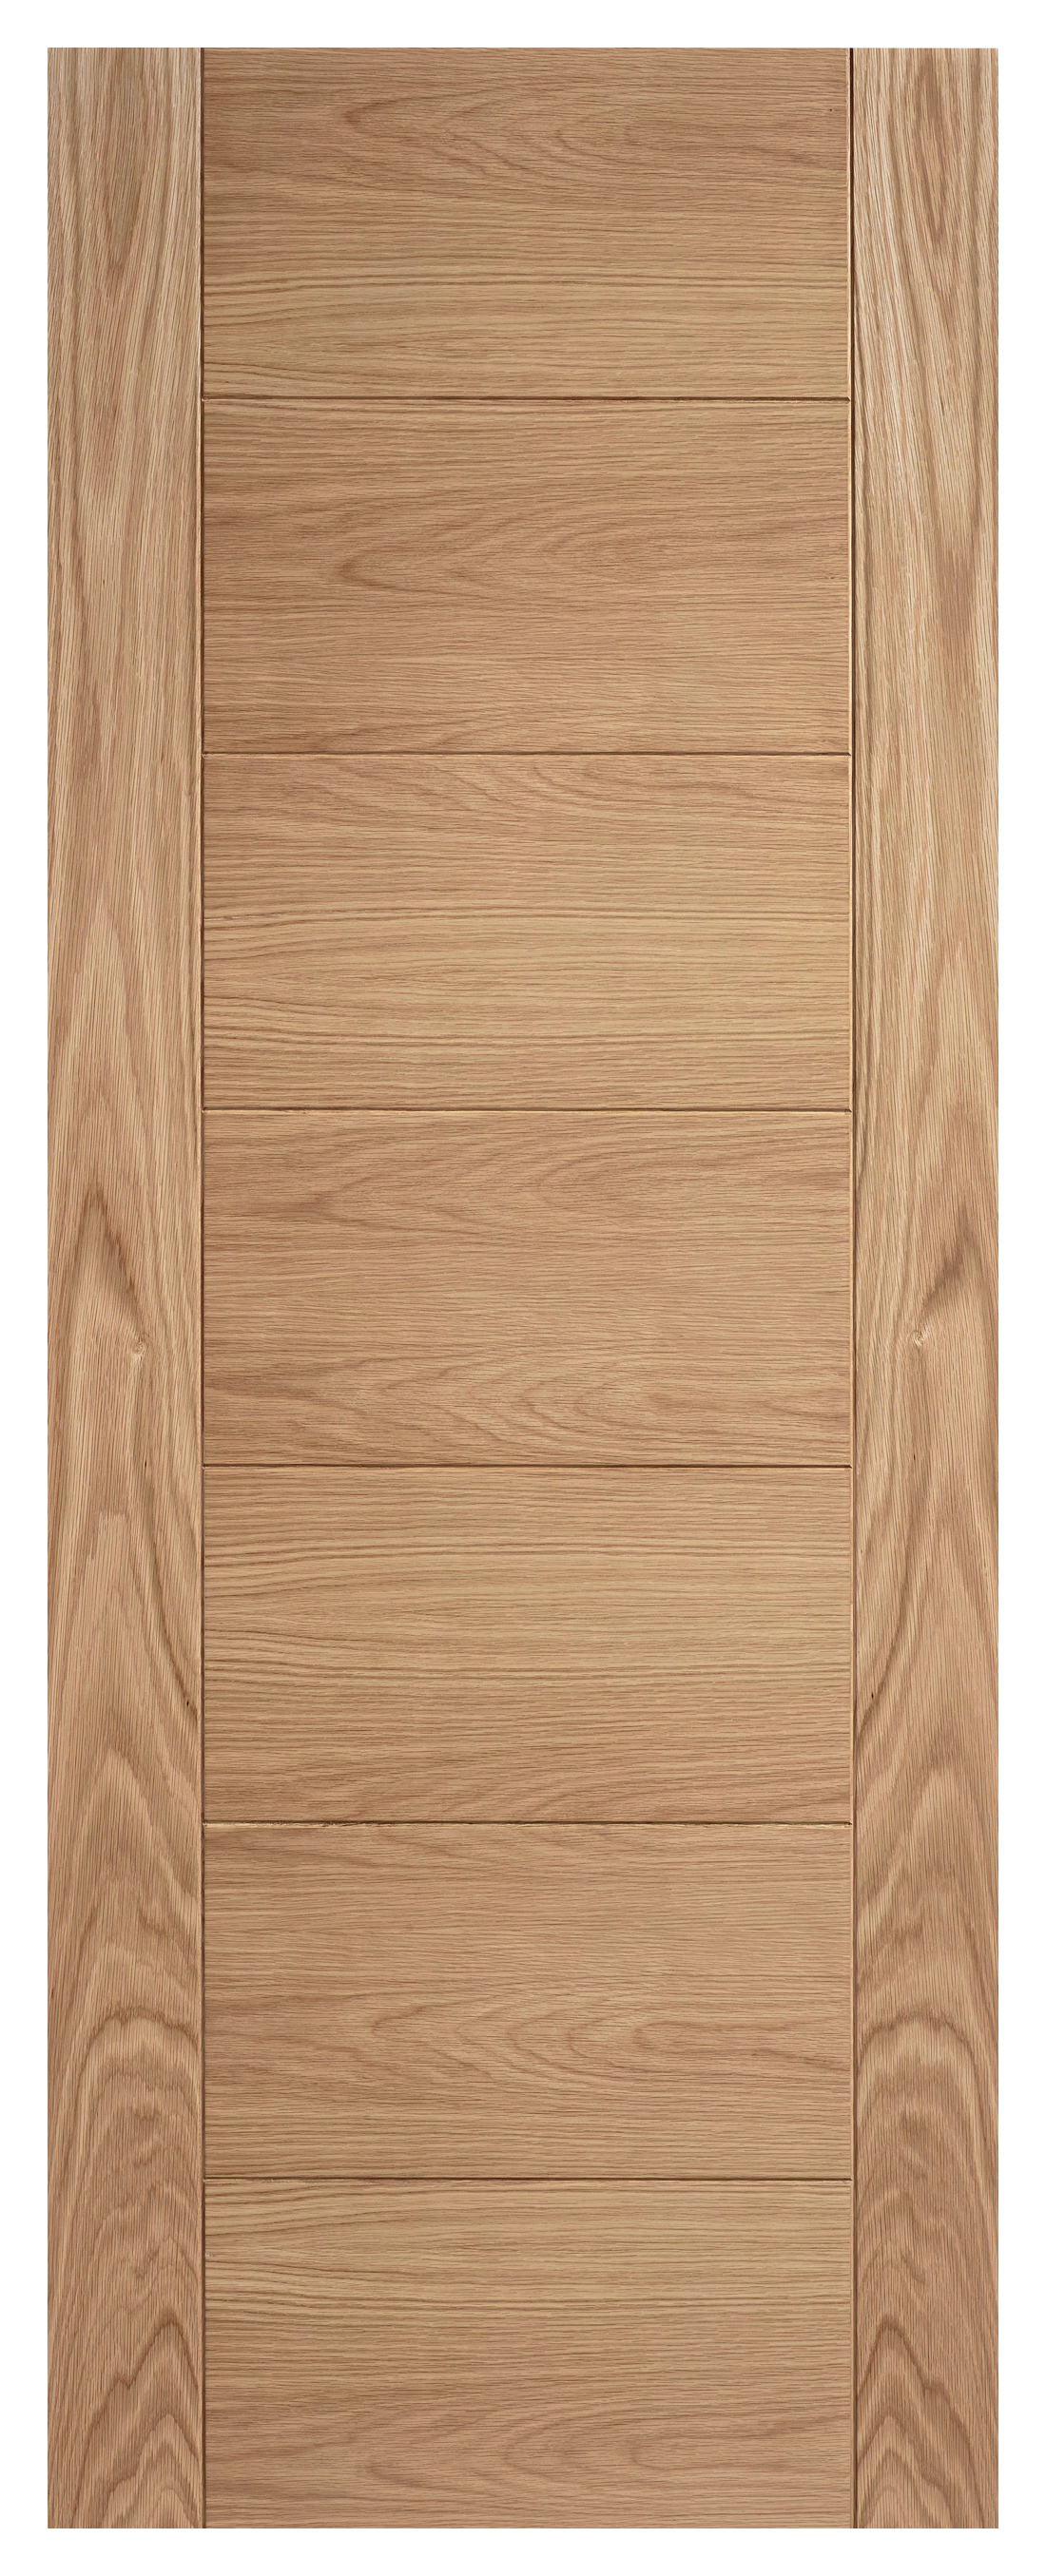 Image of LPD Internal Carini 7 Panel Unfinished Oak FD30 Fire Door - 826 x 2040mm